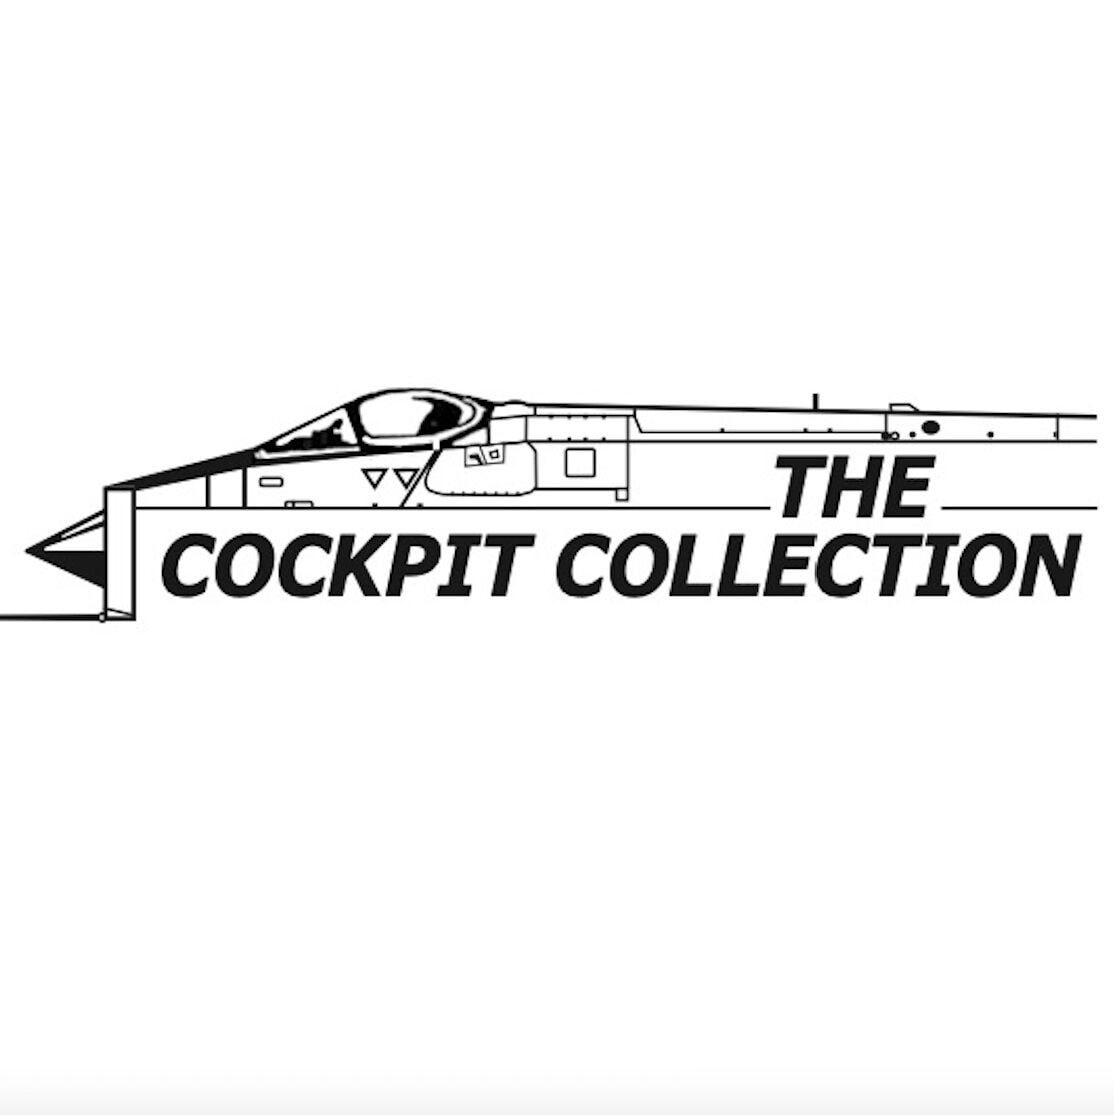 Cockpit Collection square logo.jpg